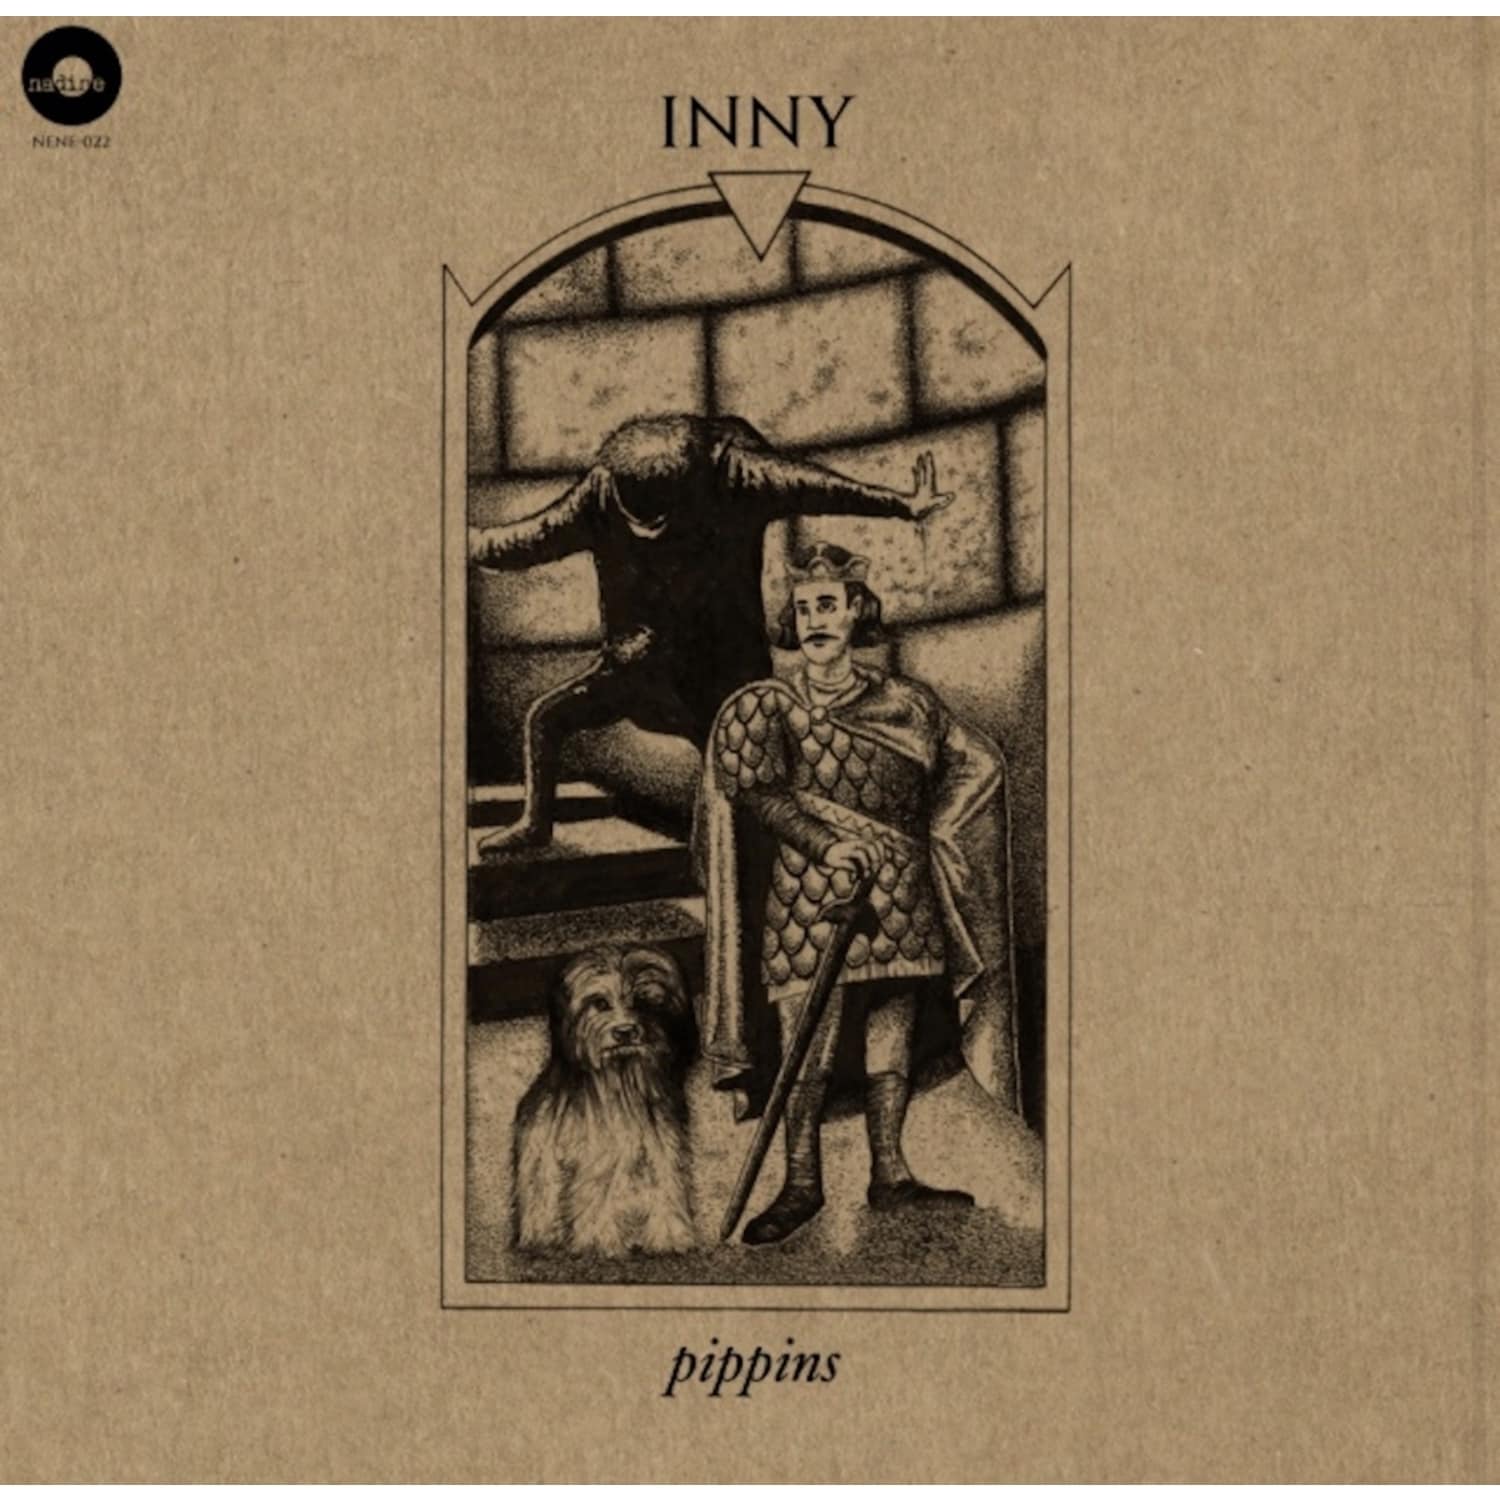 Inny - PIPPINS 